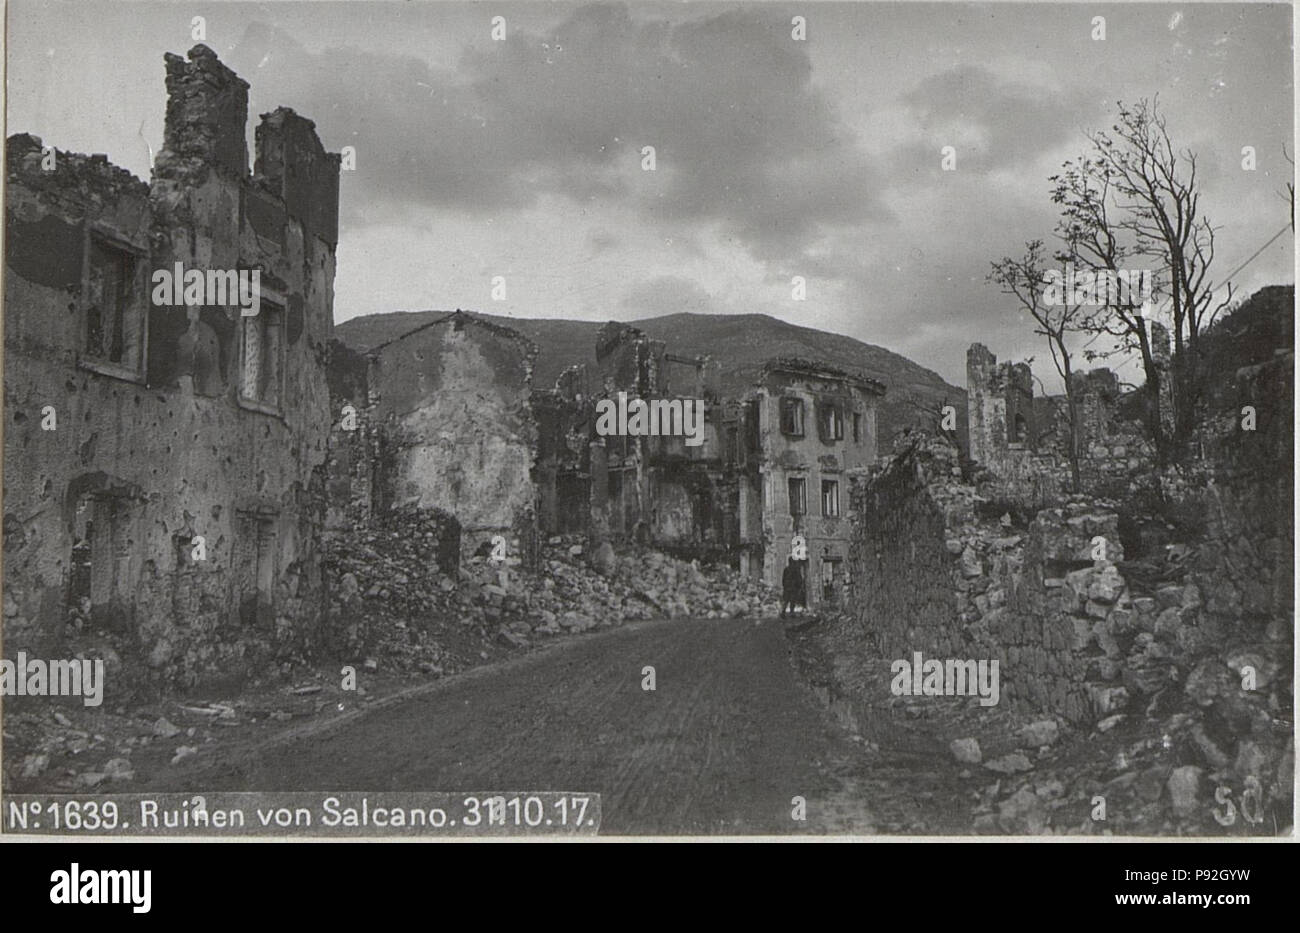 .   484 Ruinen von Salcano.31.10.17. (BildID 15607900) Stock Photo